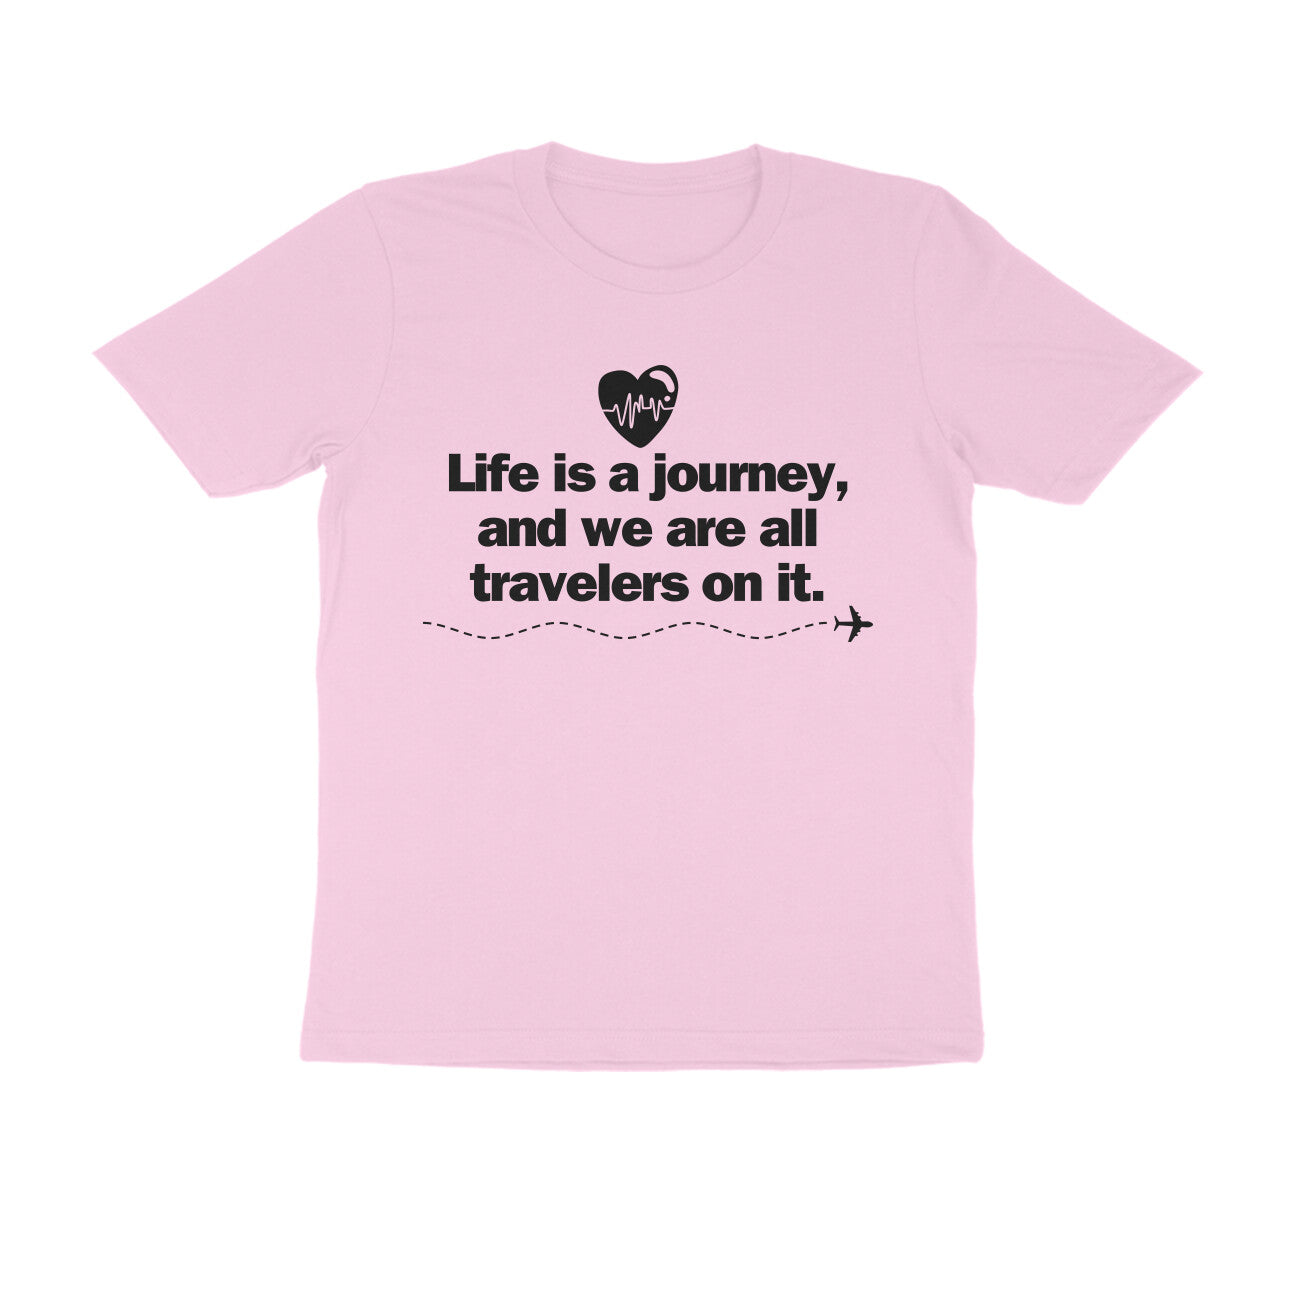 Life is a journey... Black Text Men's T-shirt